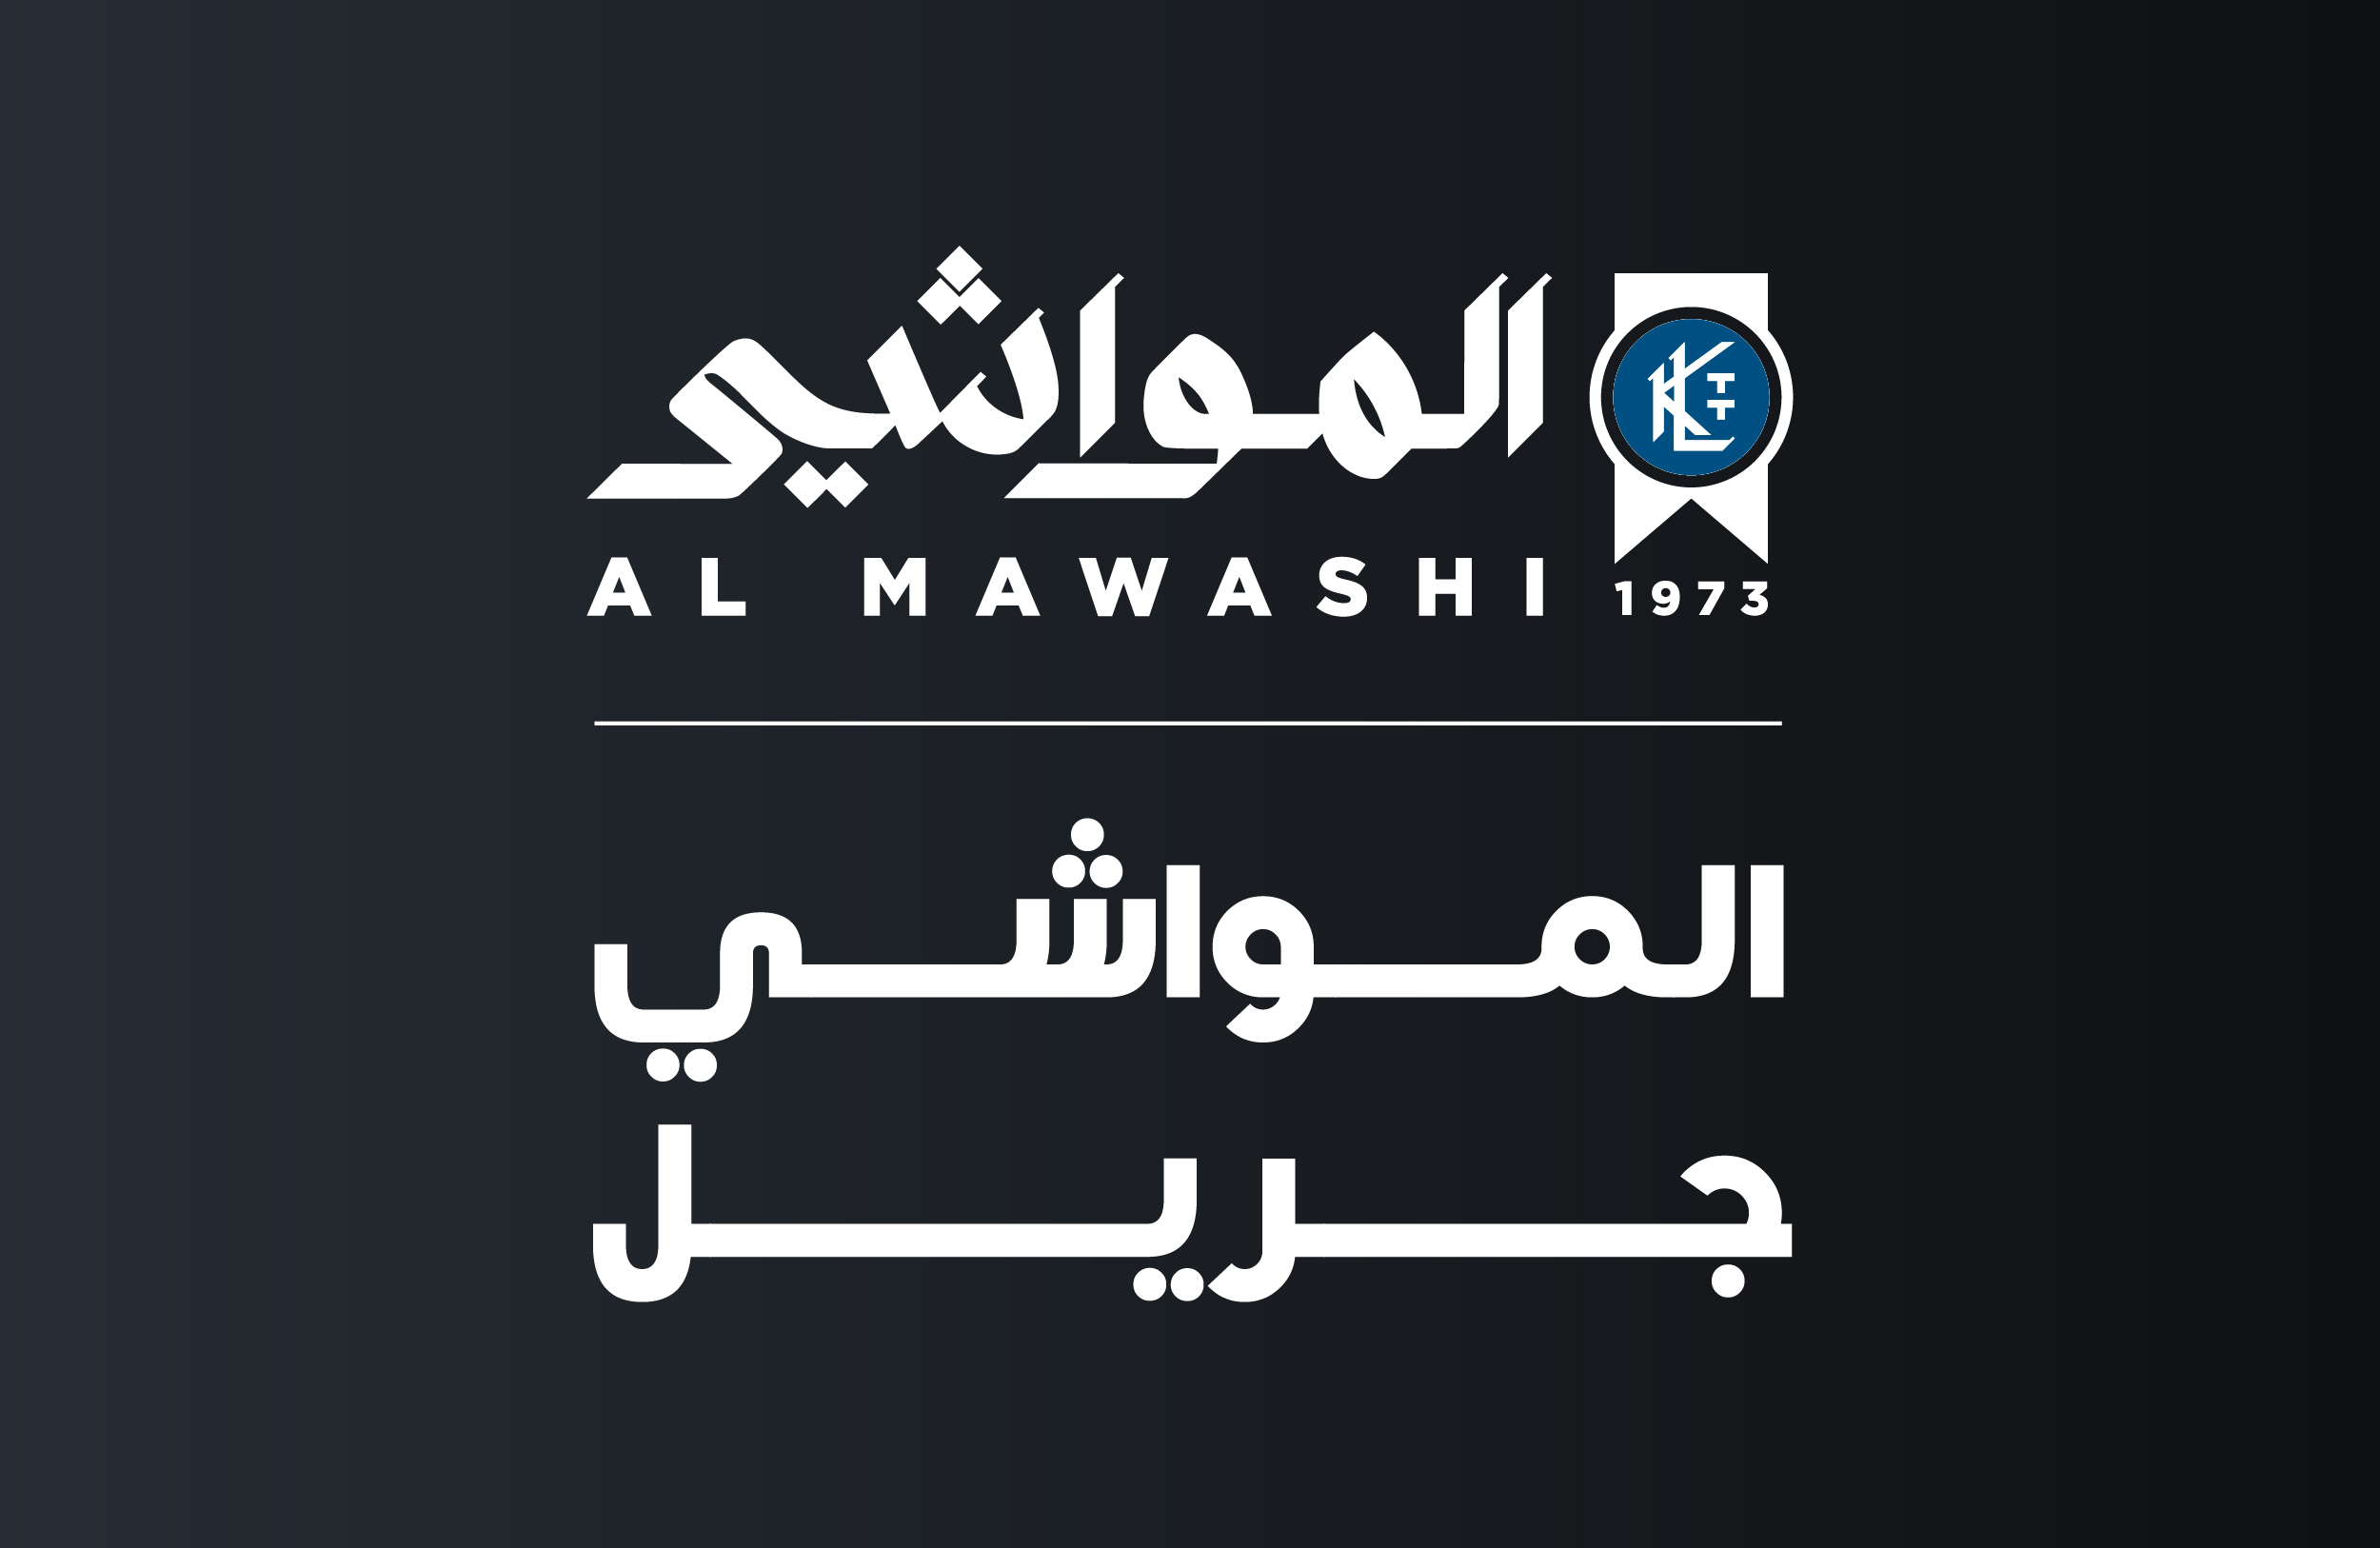 Al Mawashi Grill